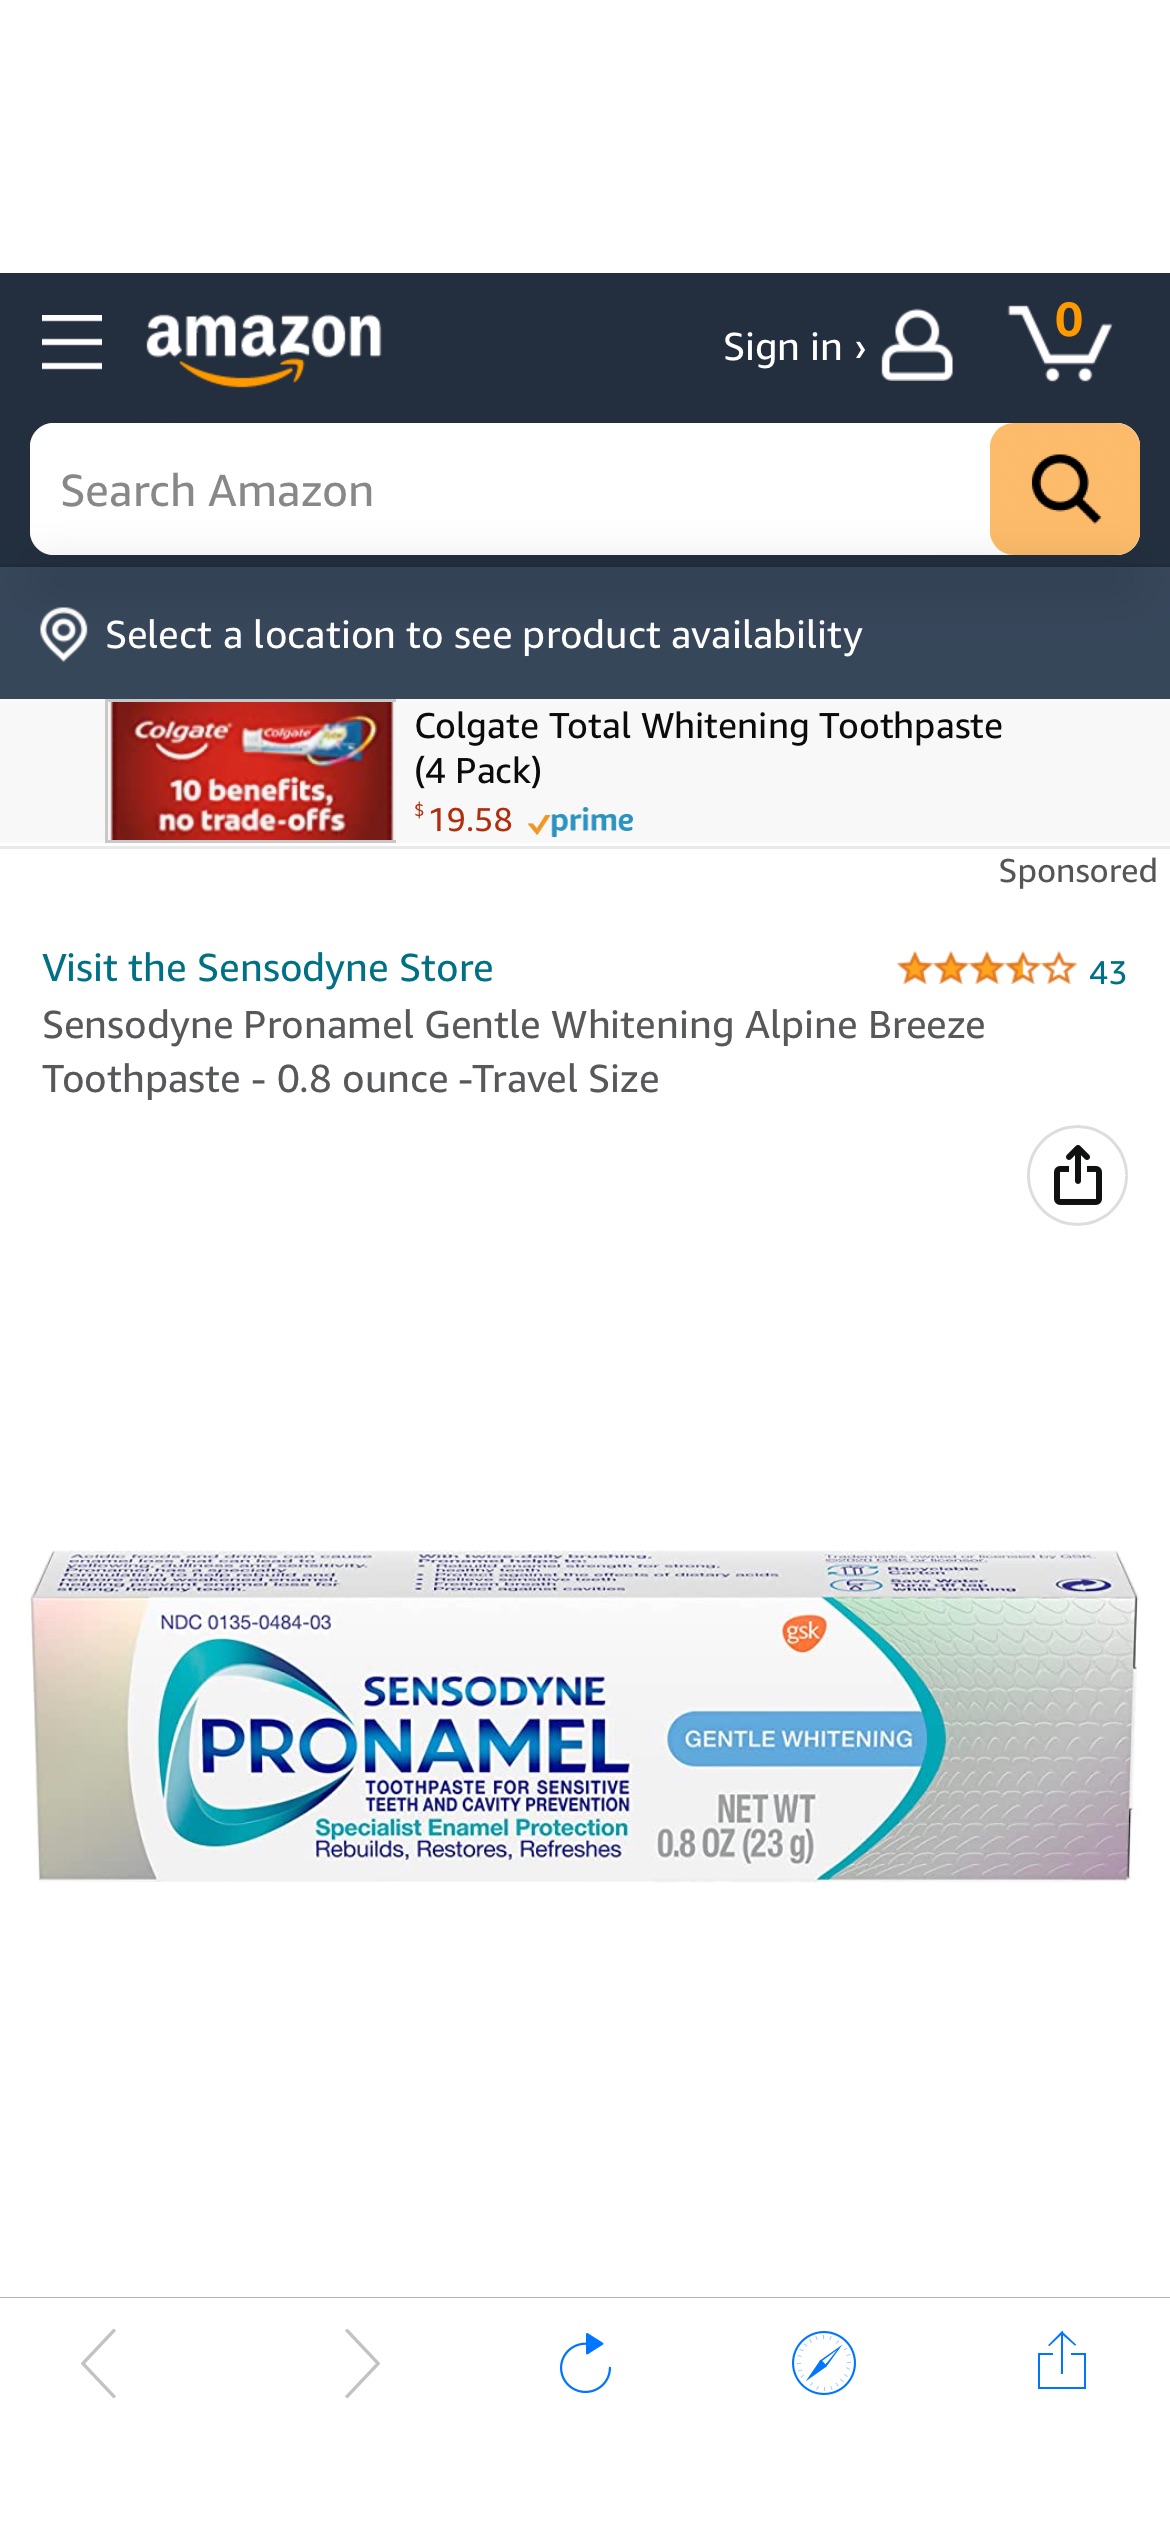 Sensodyne Pronamel Gentle Whitening Alpine Breeze Toothpaste - 0.8 ounce -Travel Size 牙膏1.57